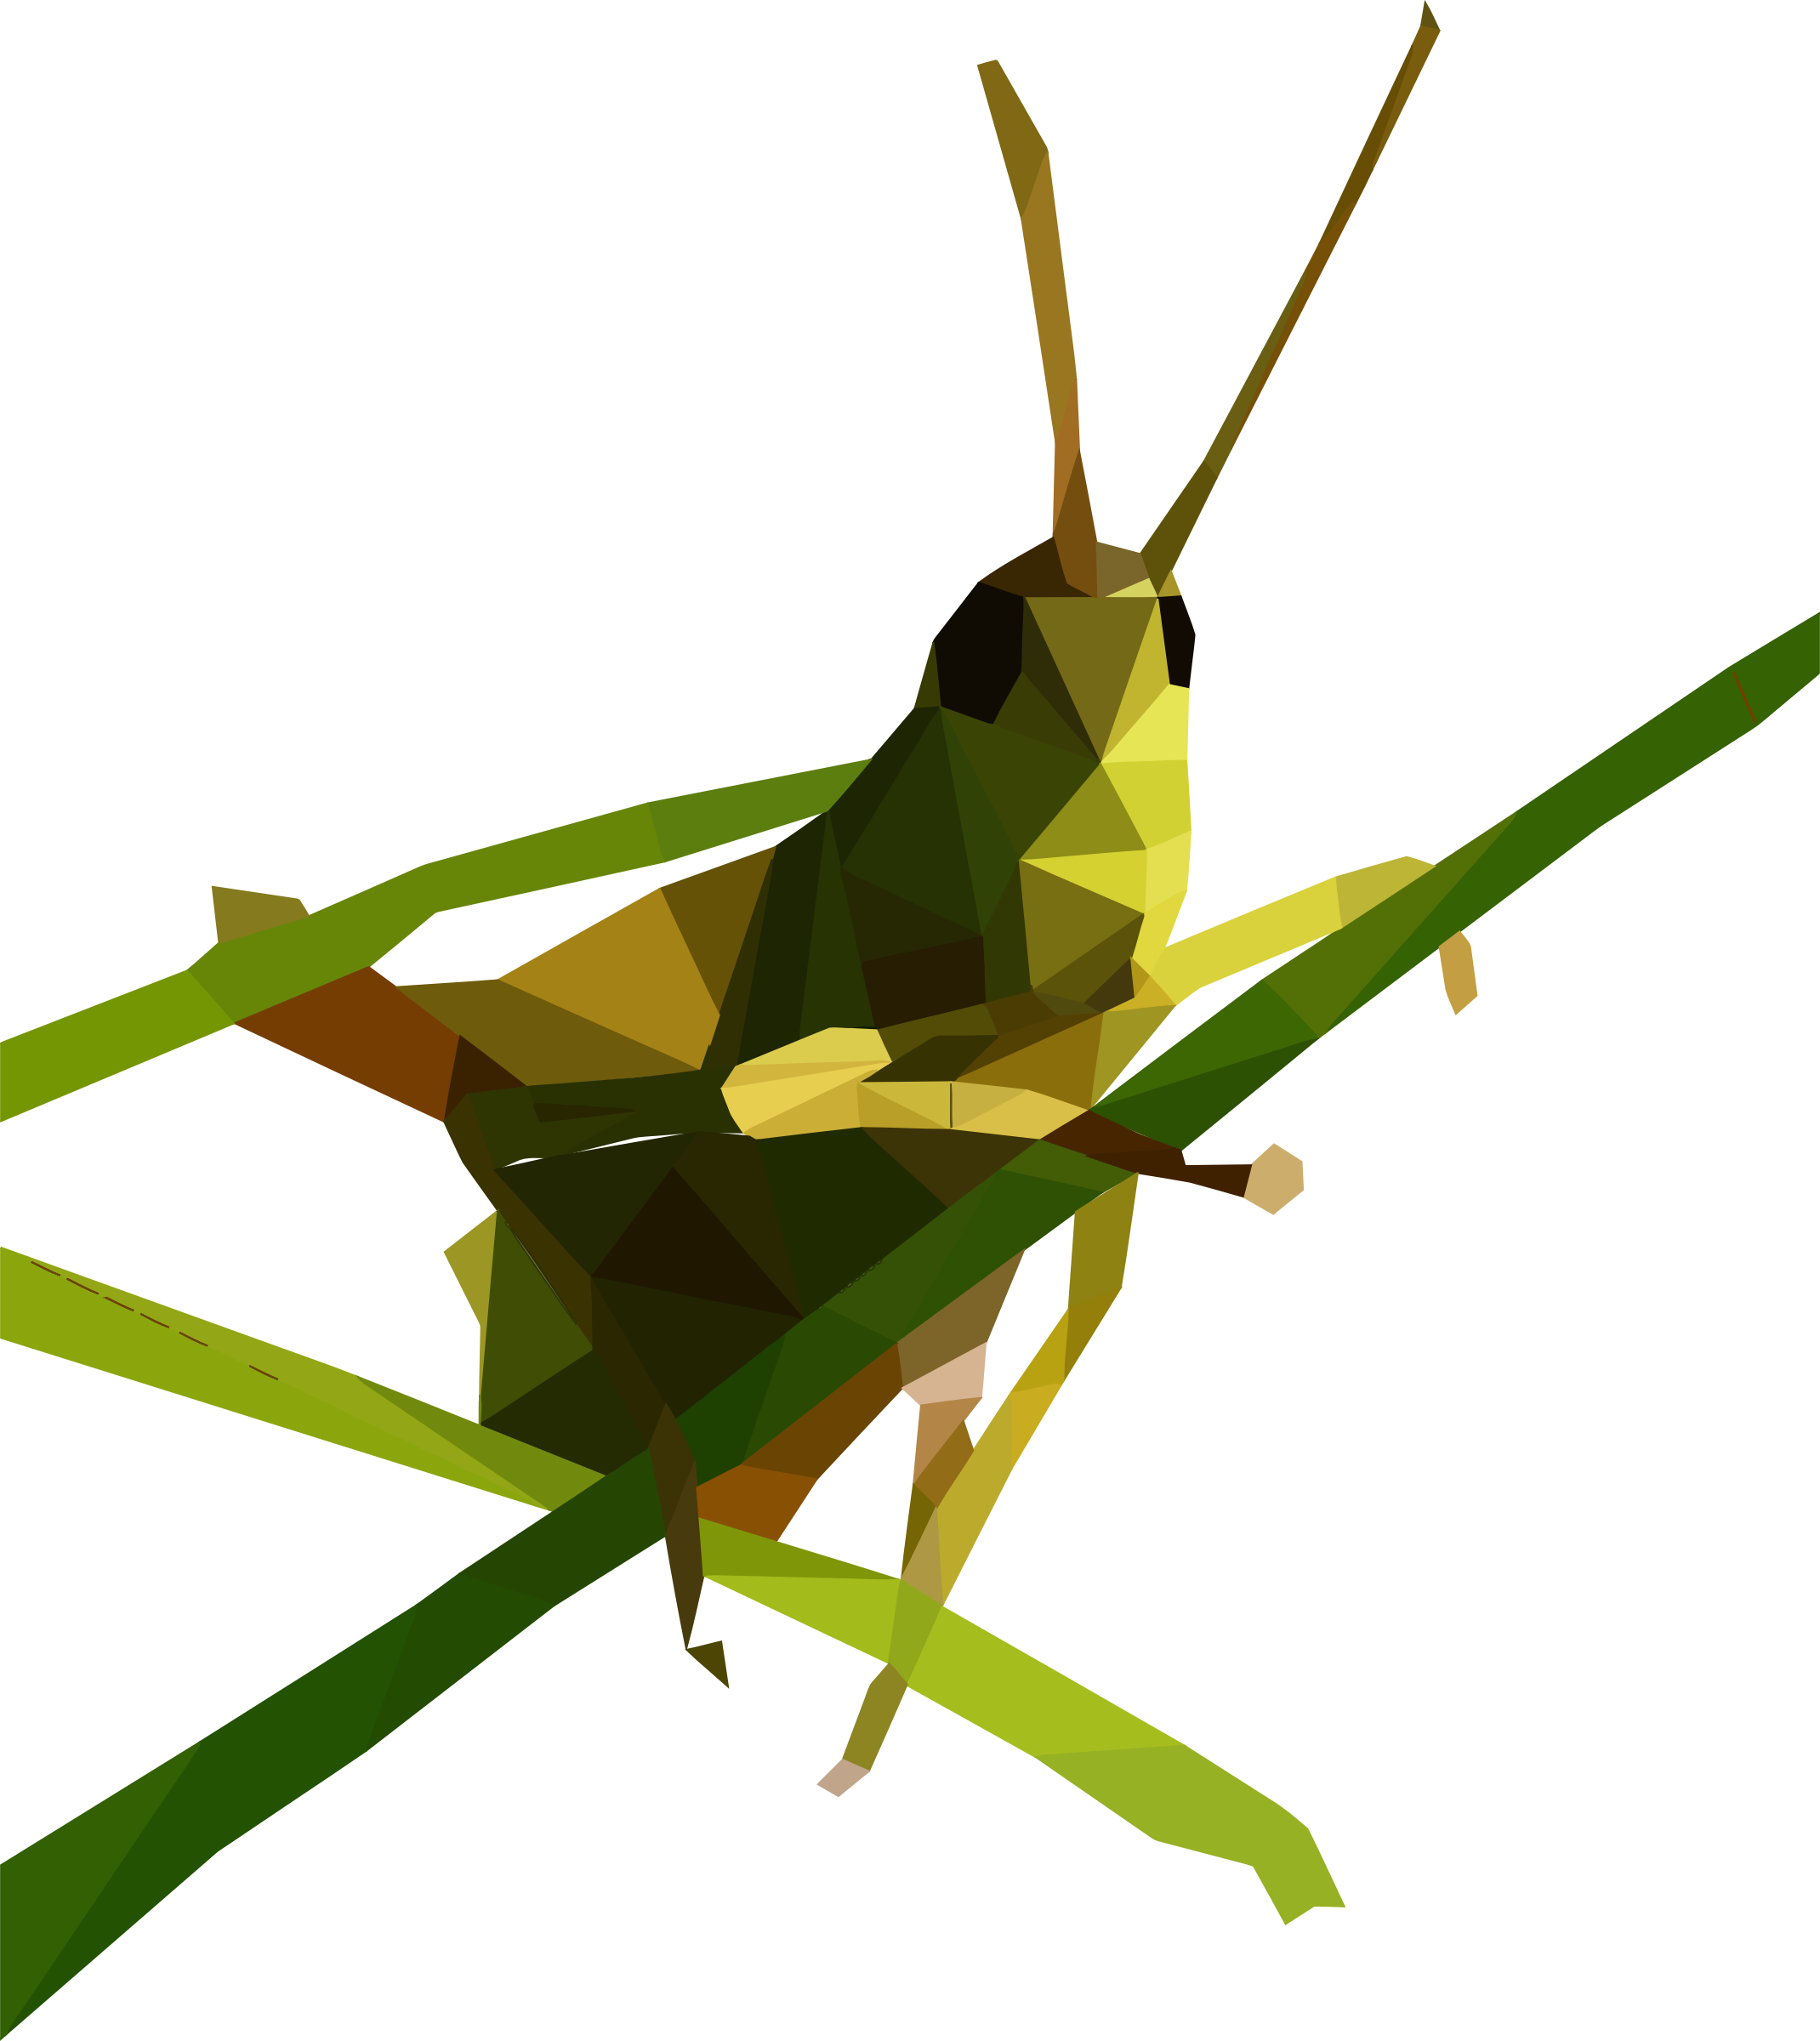 cricket clipart nymph grasshopper